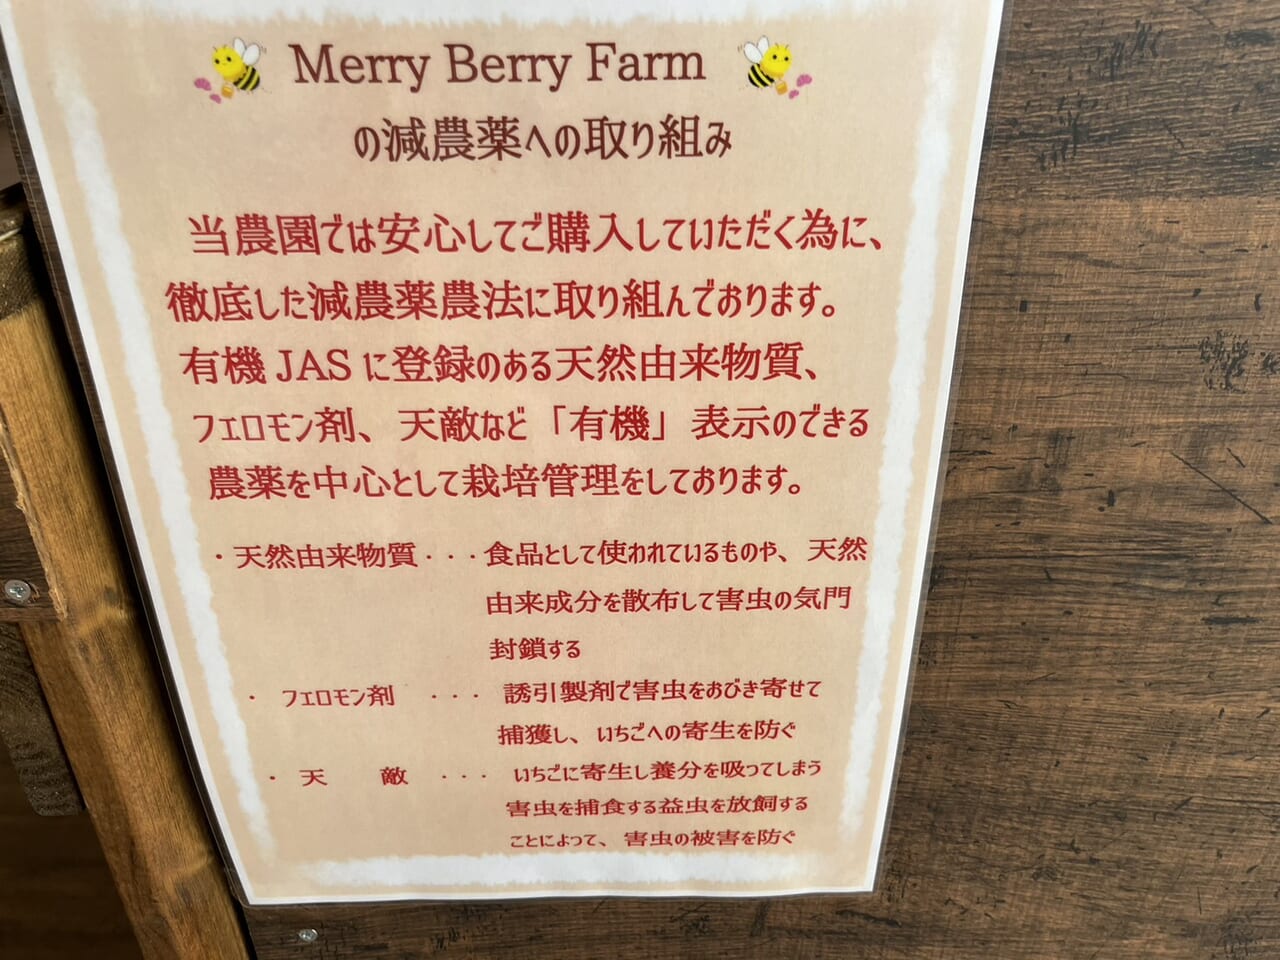 MerryBerryFarmの減農薬の取組みについて